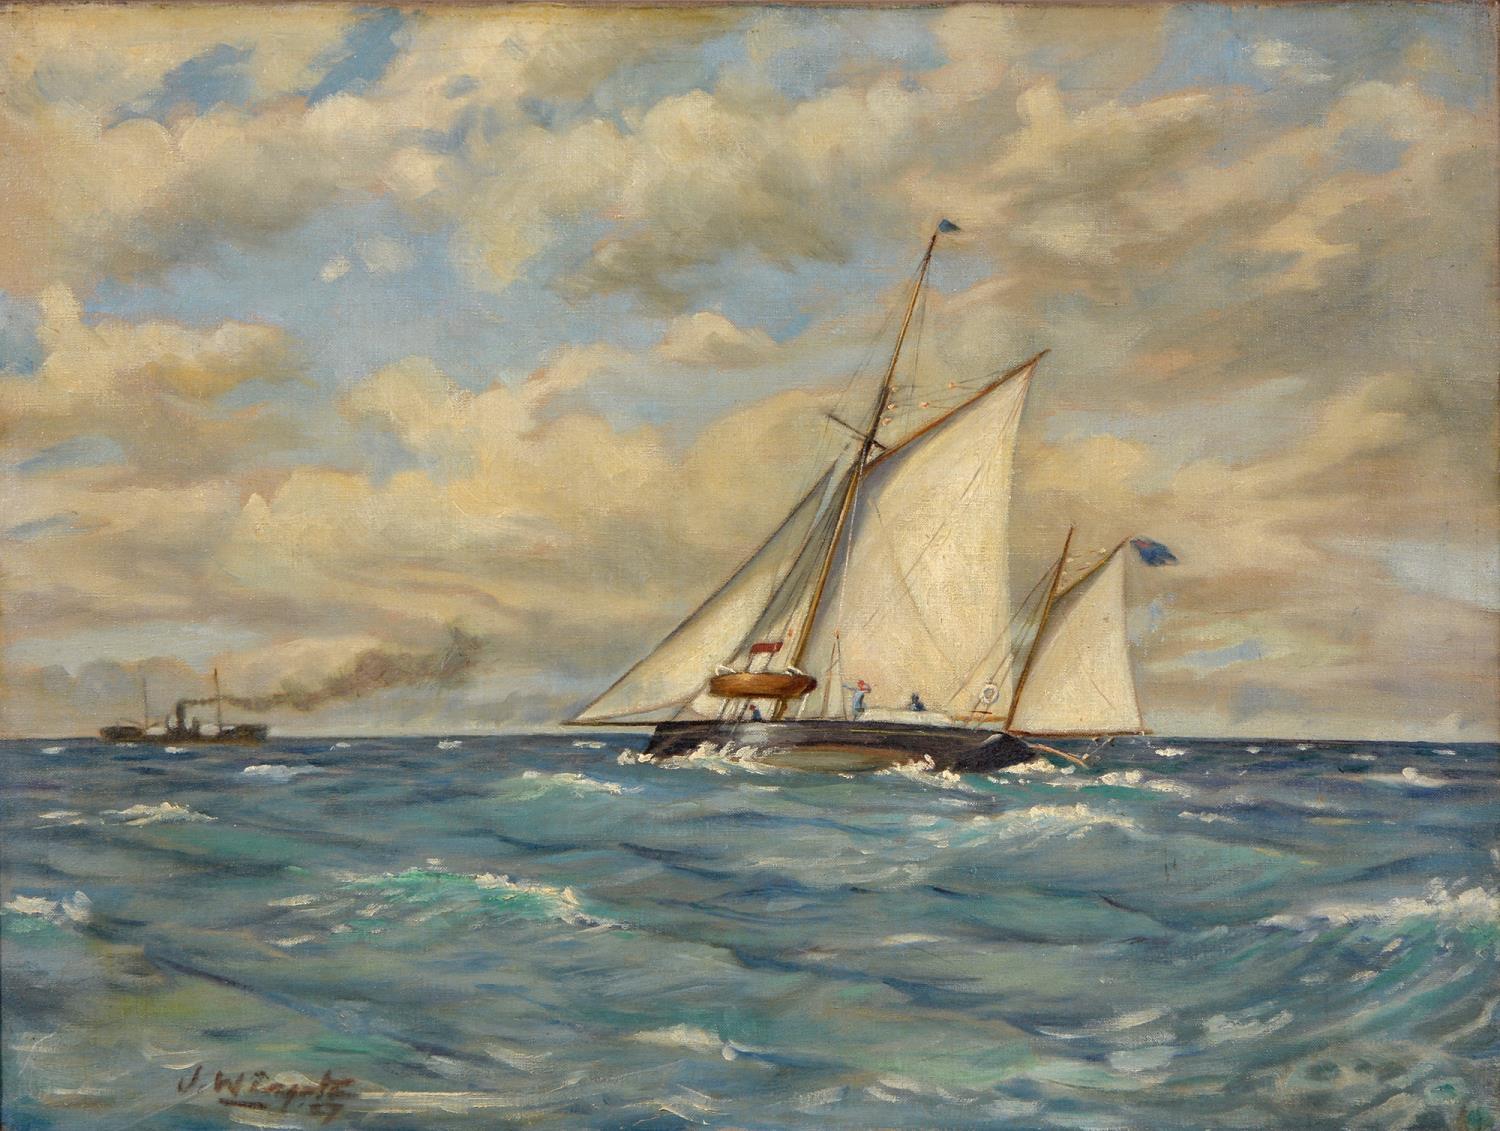 Figurative Painting J. Wingate  - English Impressionist Signed Oil Painting Sailing Yacht at Sea with Tug Boat (peinture à l'huile signée par un impressionniste) 